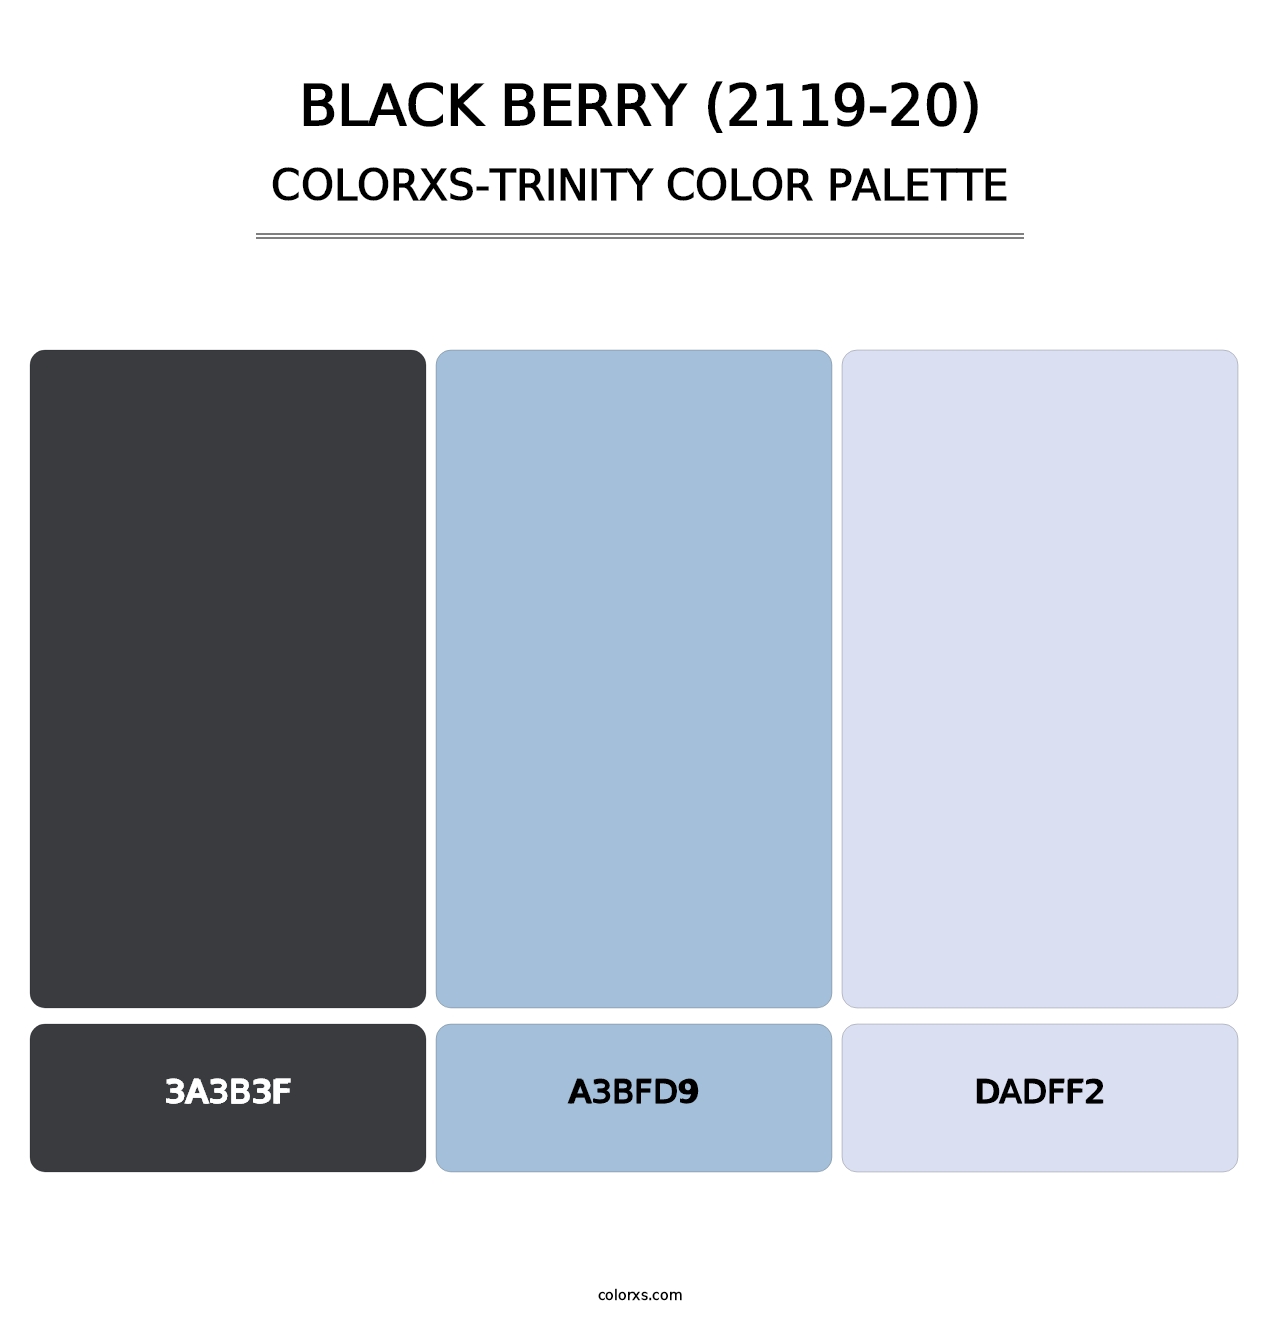 Black Berry (2119-20) - Colorxs Trinity Palette